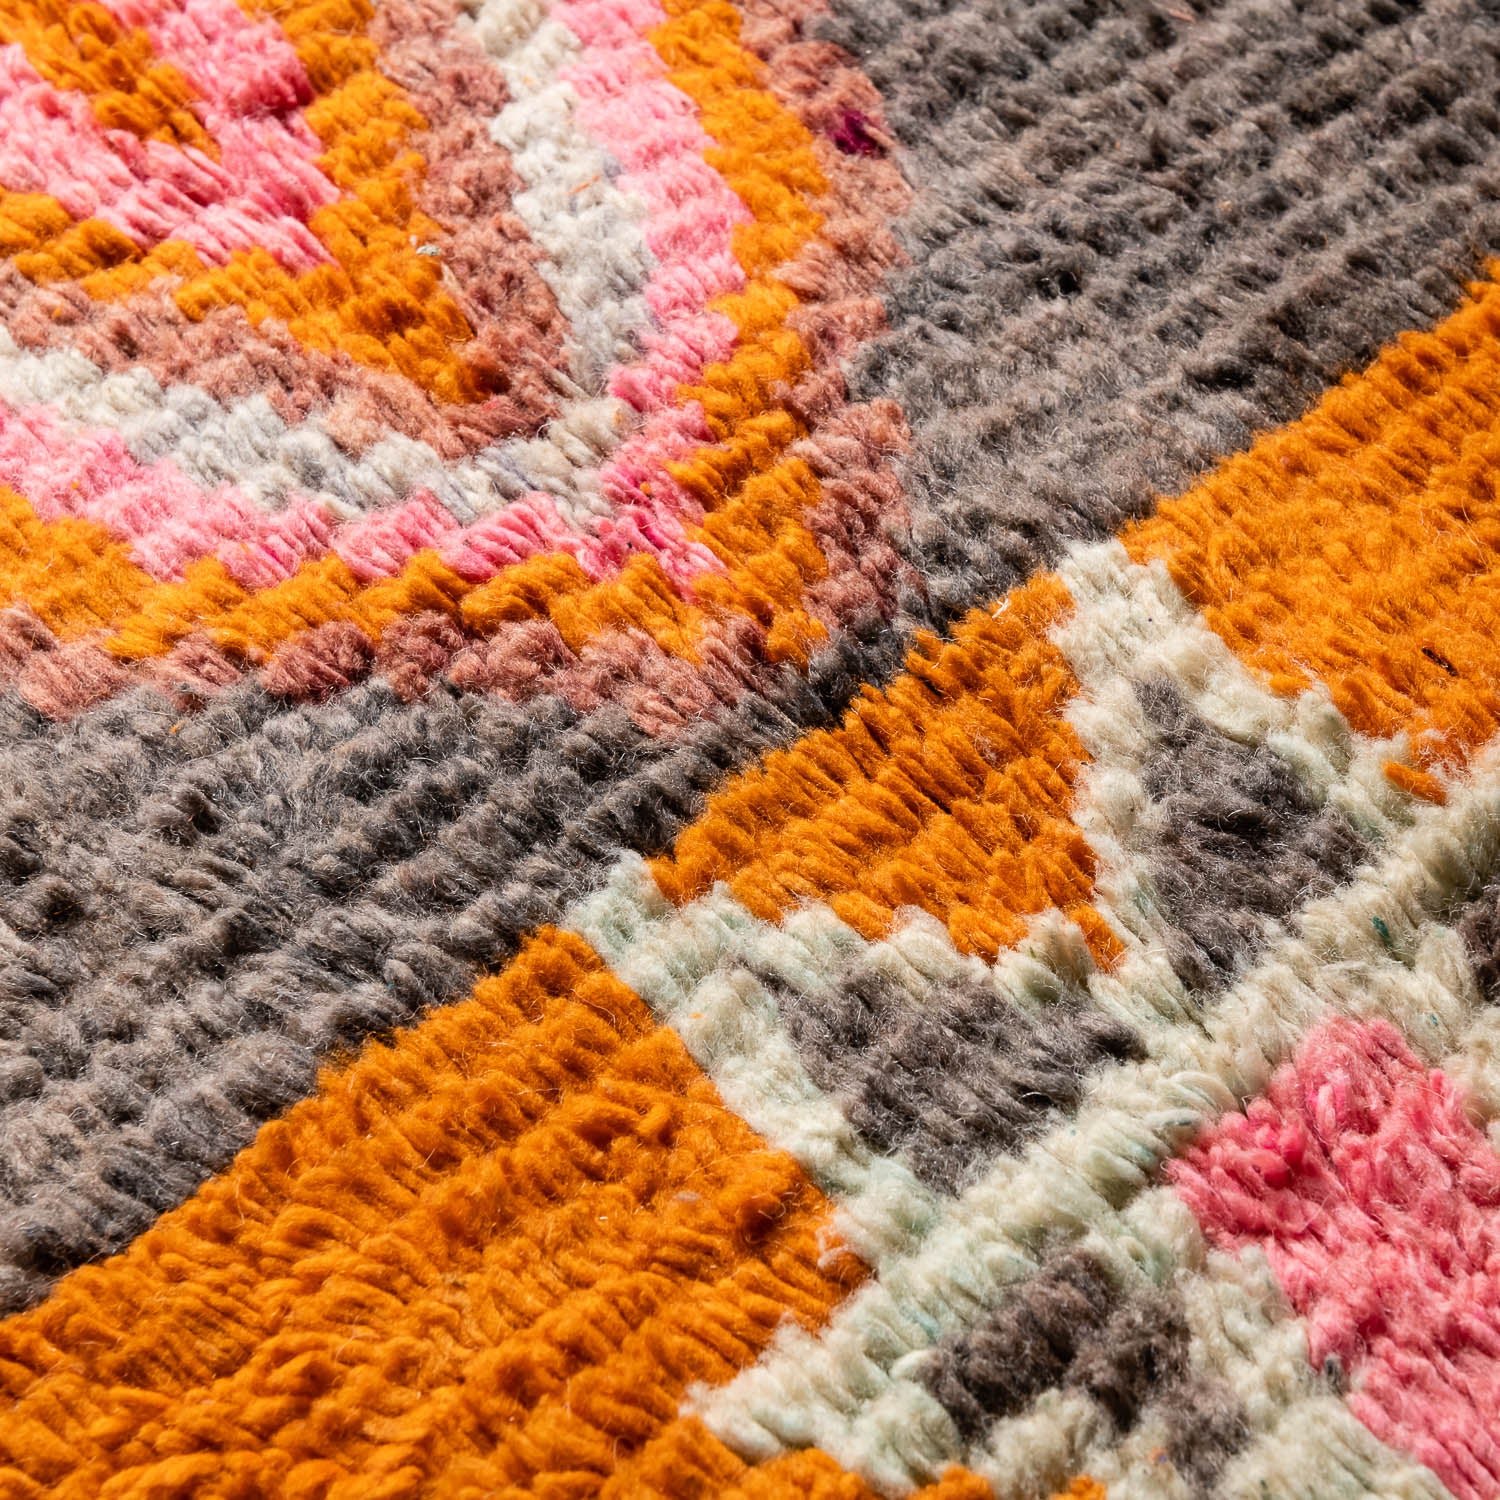 Keltoum - Vintage Moroccan rug